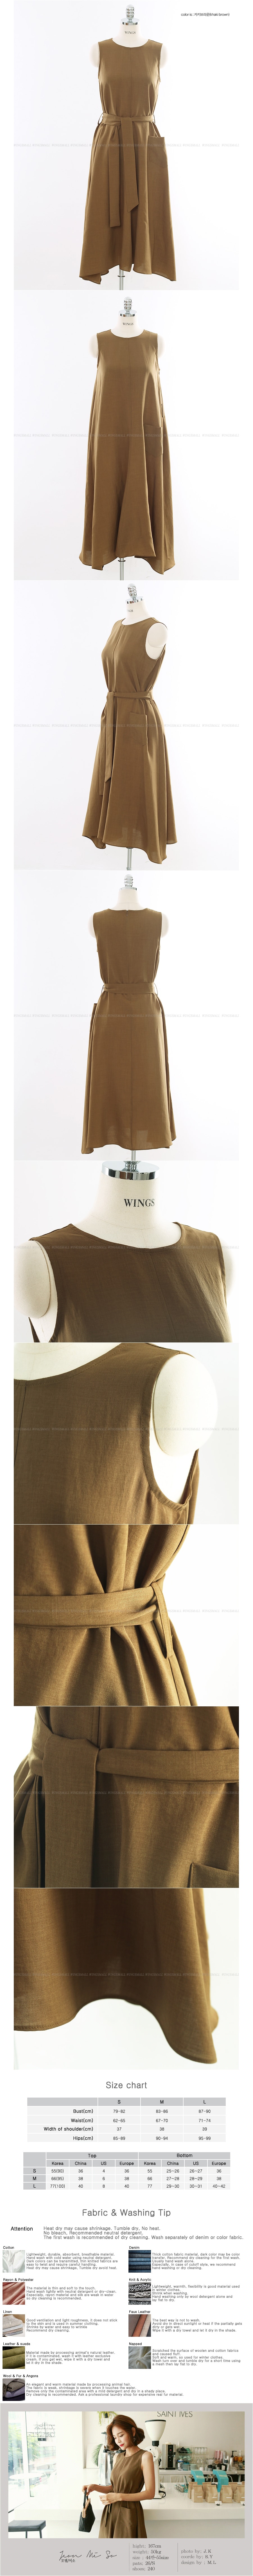 WINGS Sleeveless A-Line Tie-Belt Dress #Khaki Brown One Size(S-M)